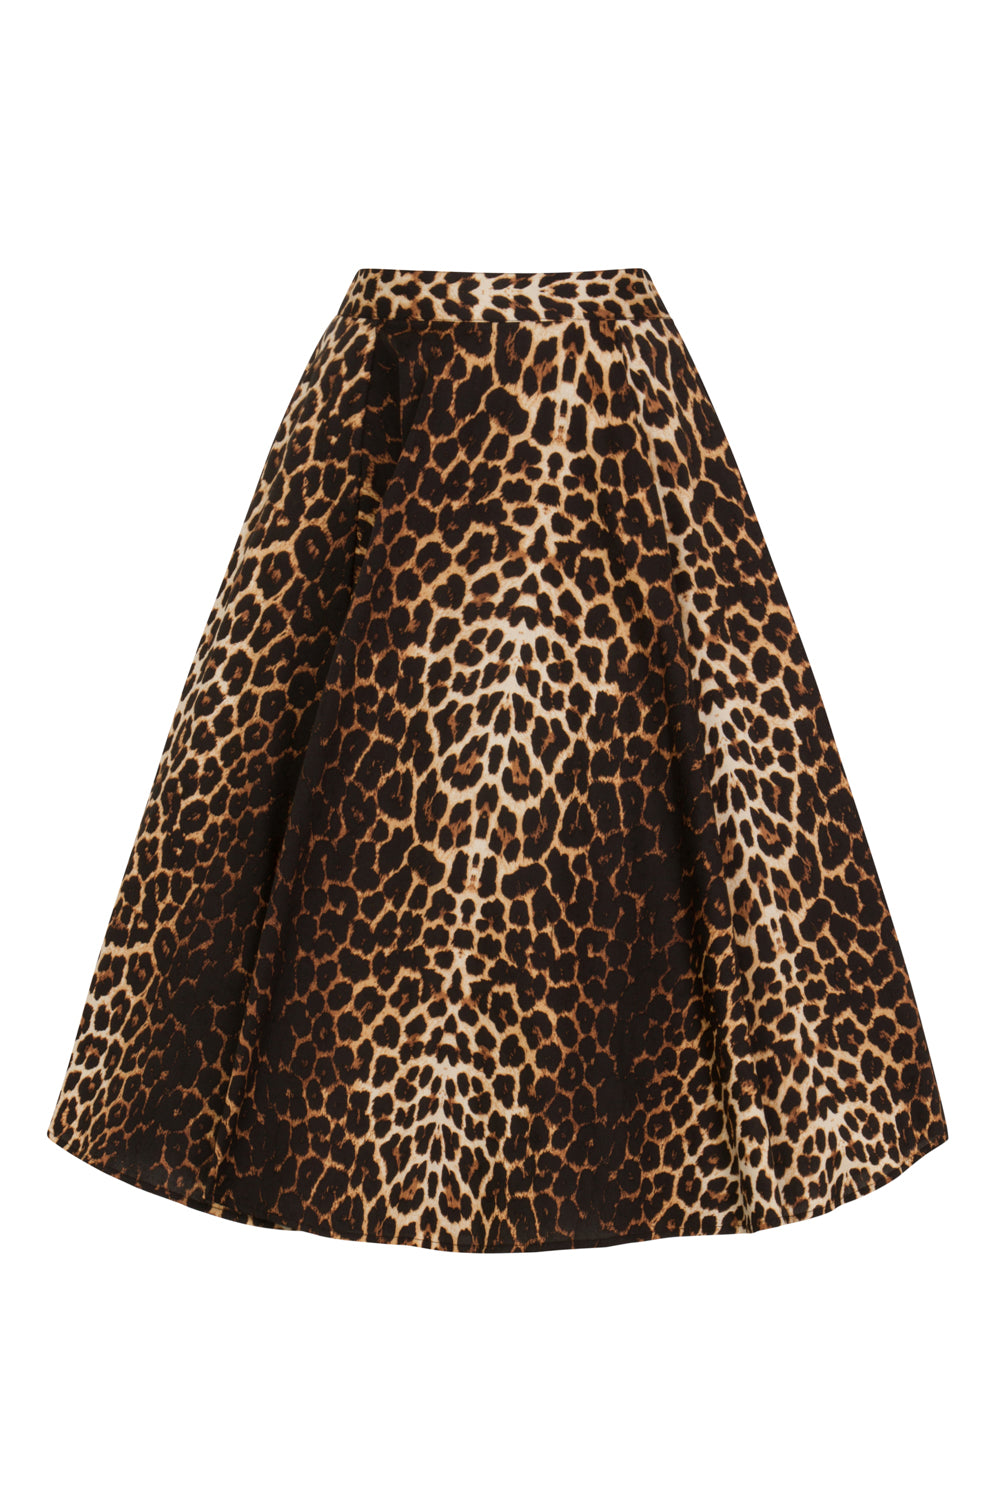 Panthera 50's Skirt